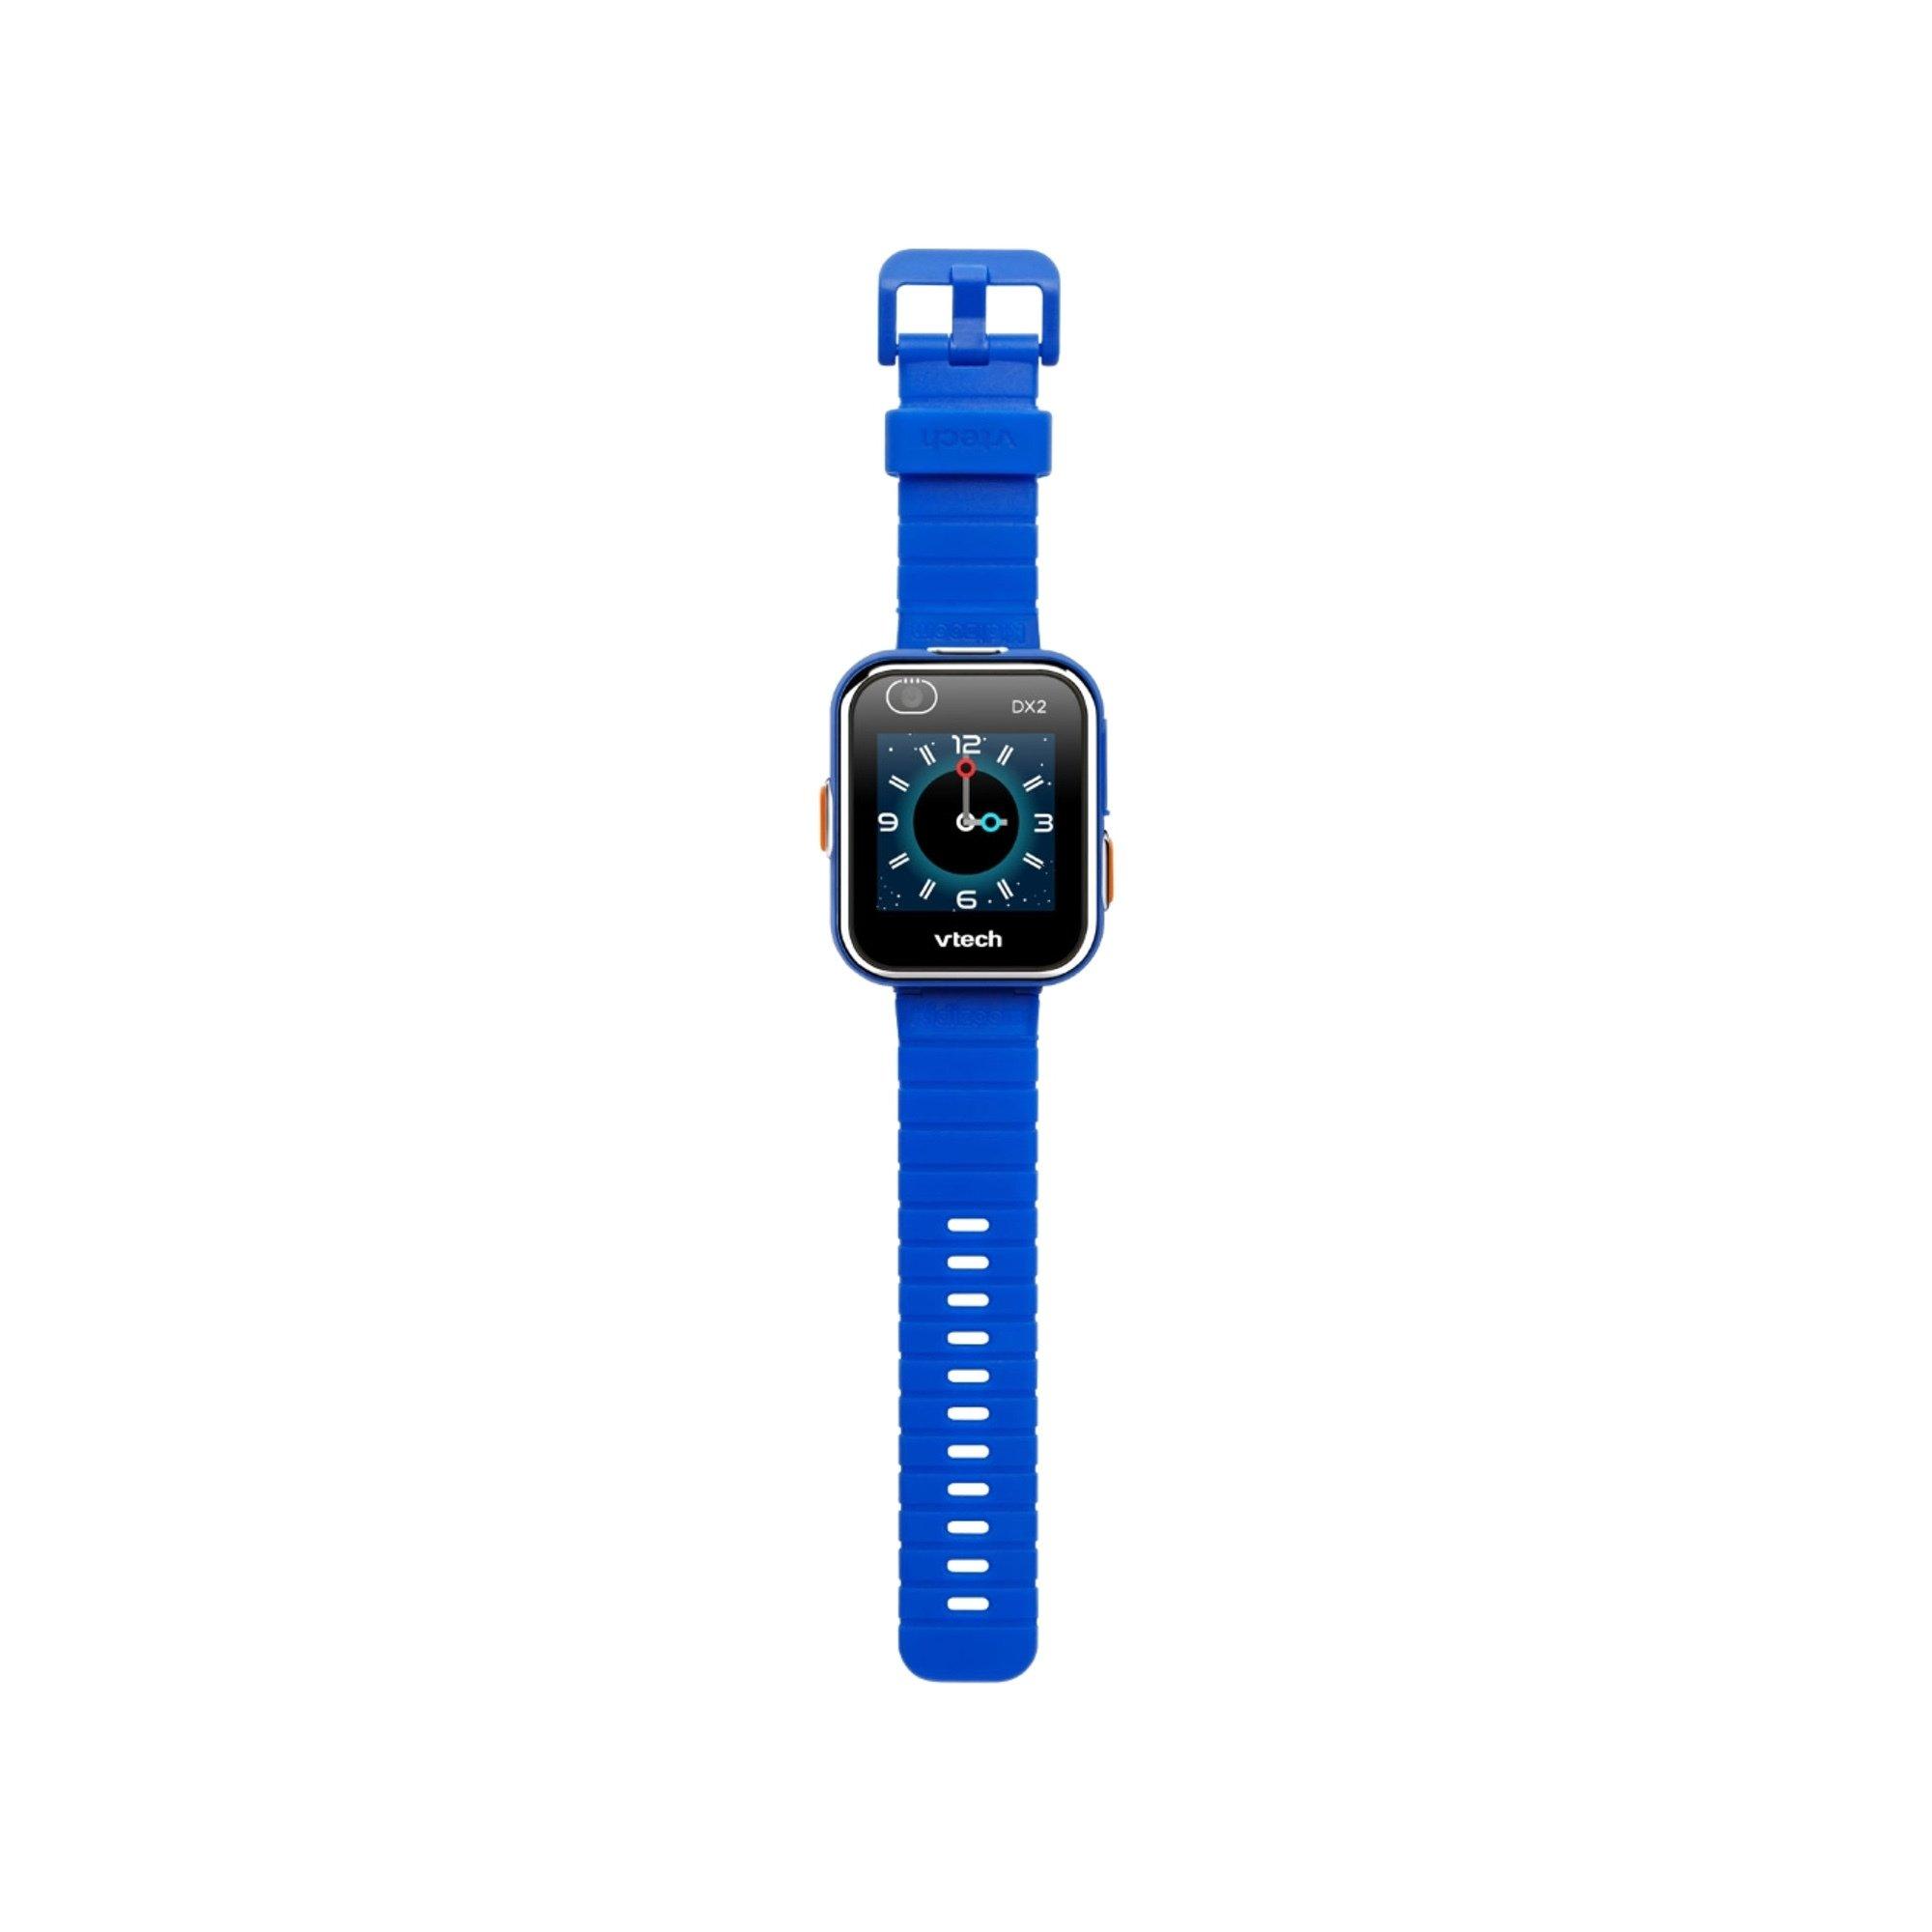 vtech  Kidizoom Smartwatch DX2 blu, Italliano 